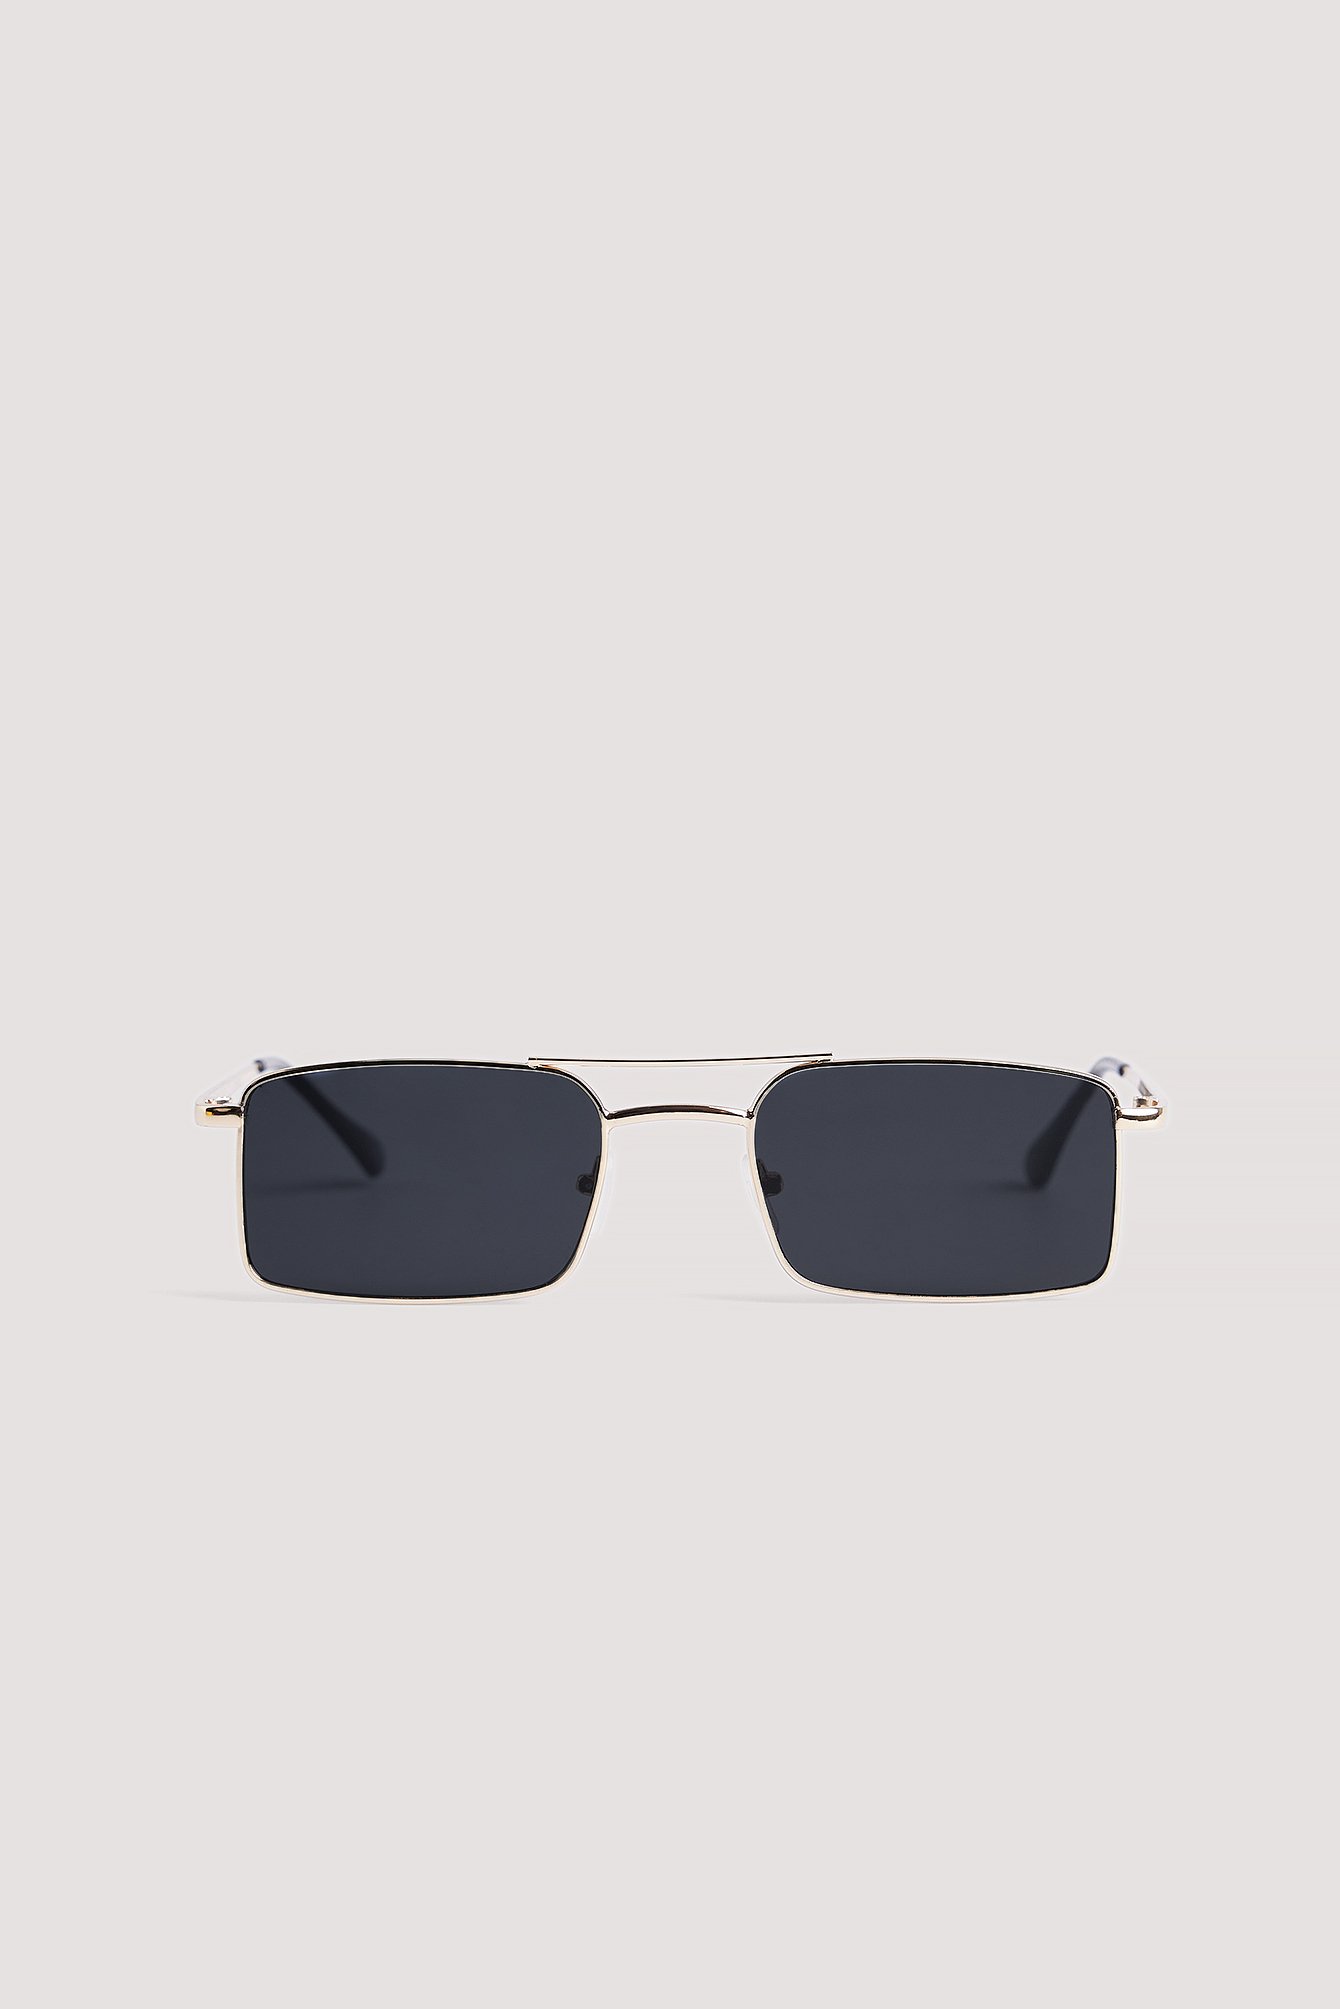 Black/Gold Squared Aviator Sunglasses